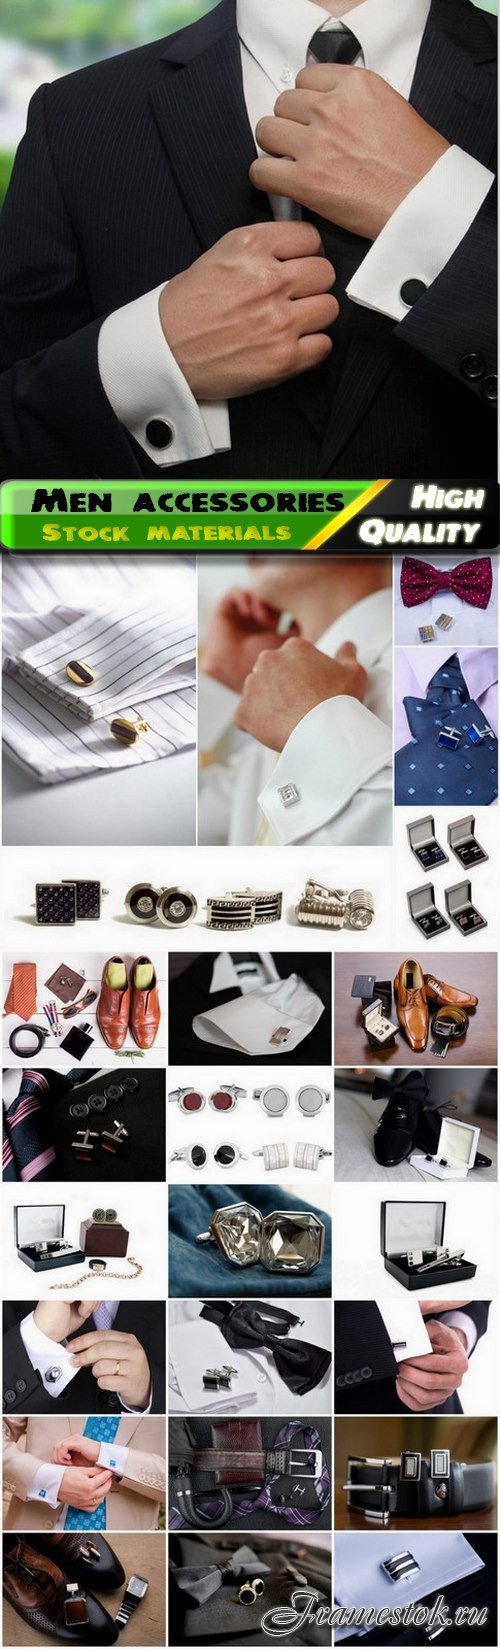 Men accessories - suit cufflinks bow tie shoes - 25 HQ Jpg